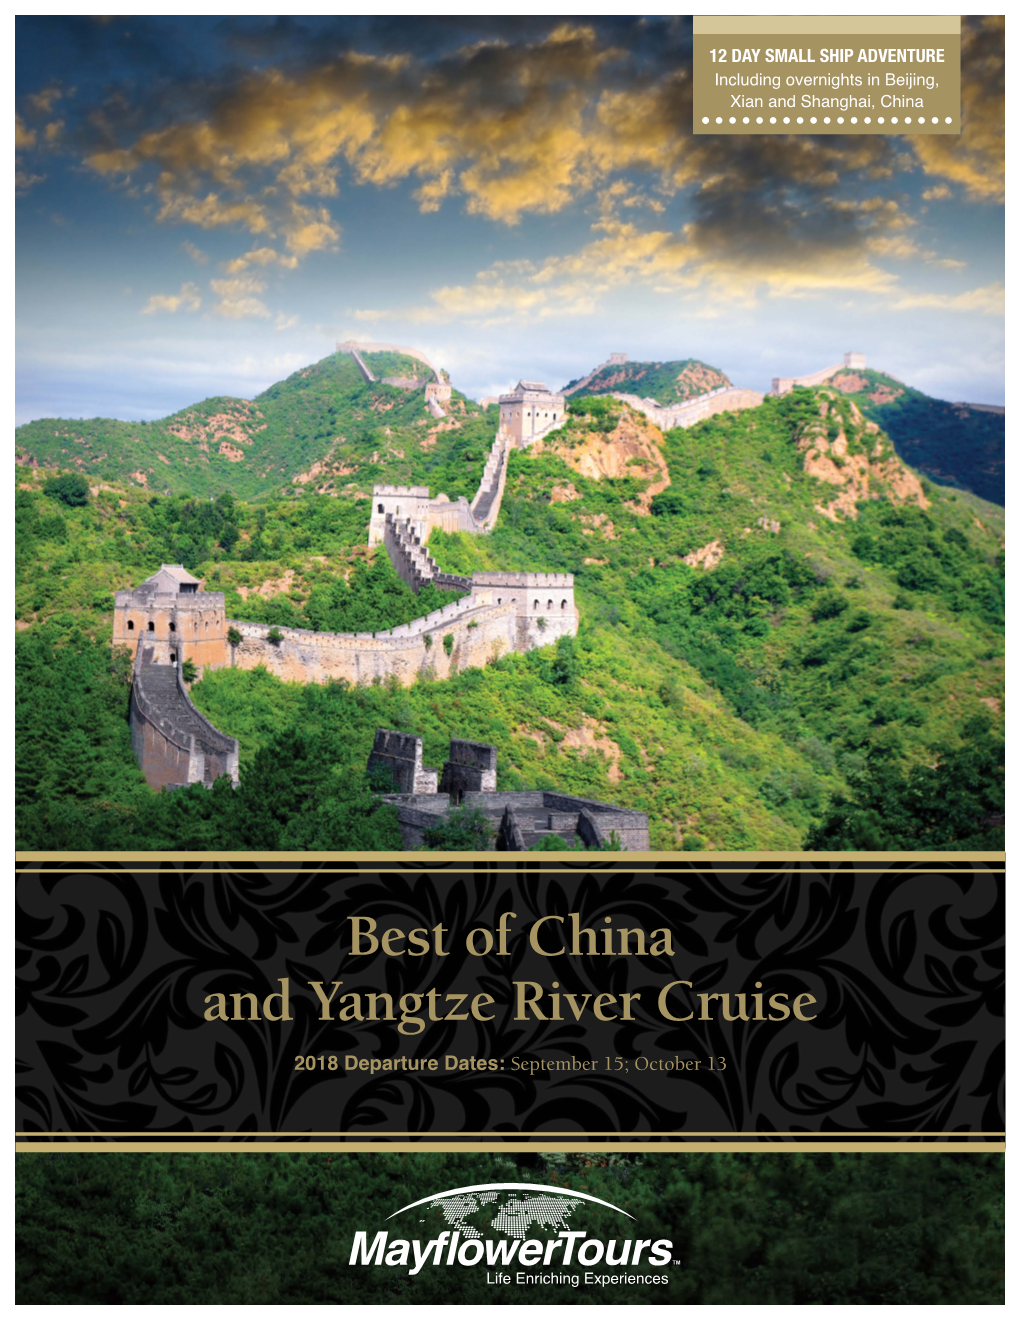 Best of China and Yangtze River Cruise